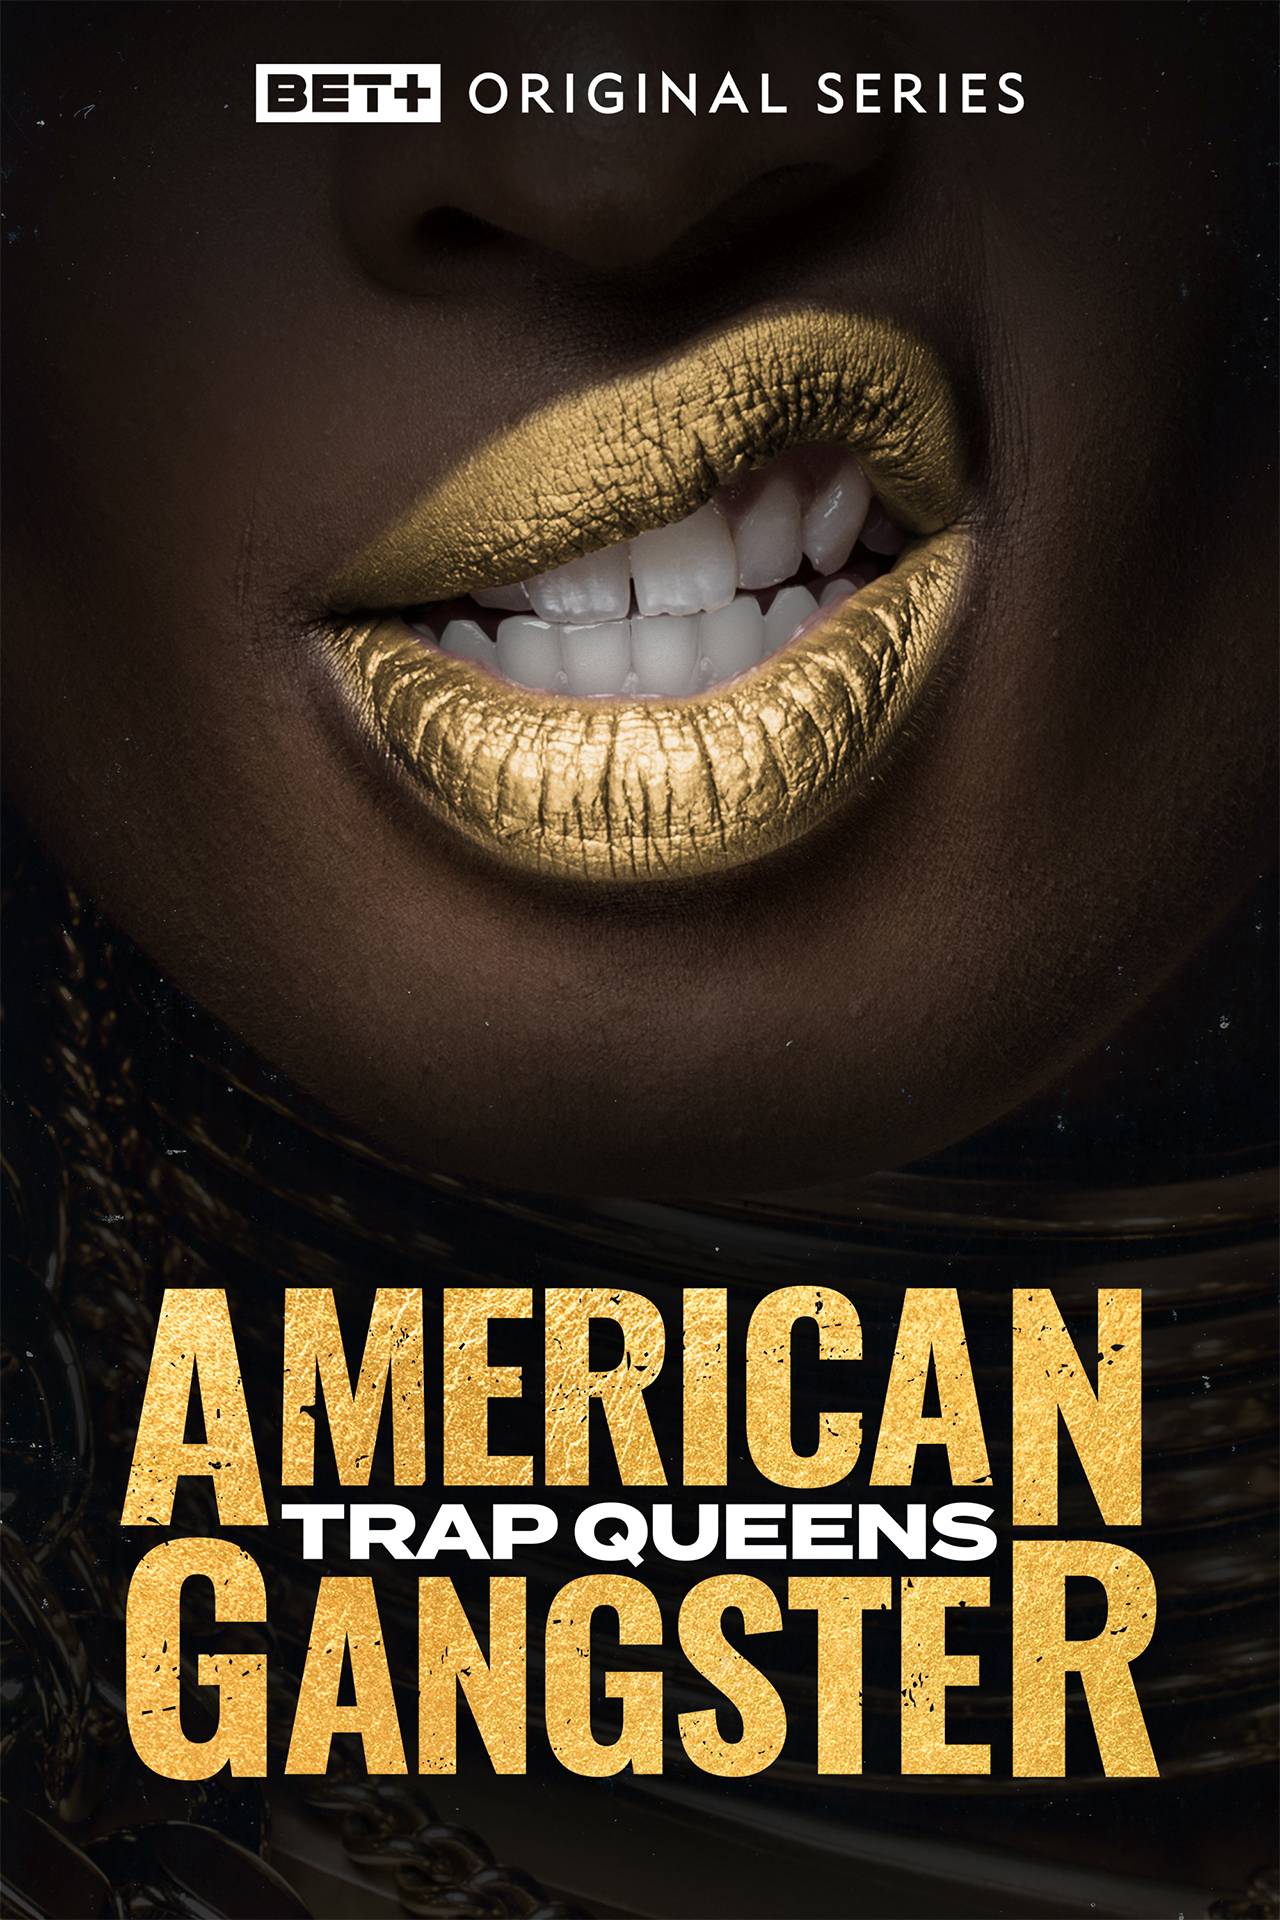 American Gangster: Trap Queens - TV Series